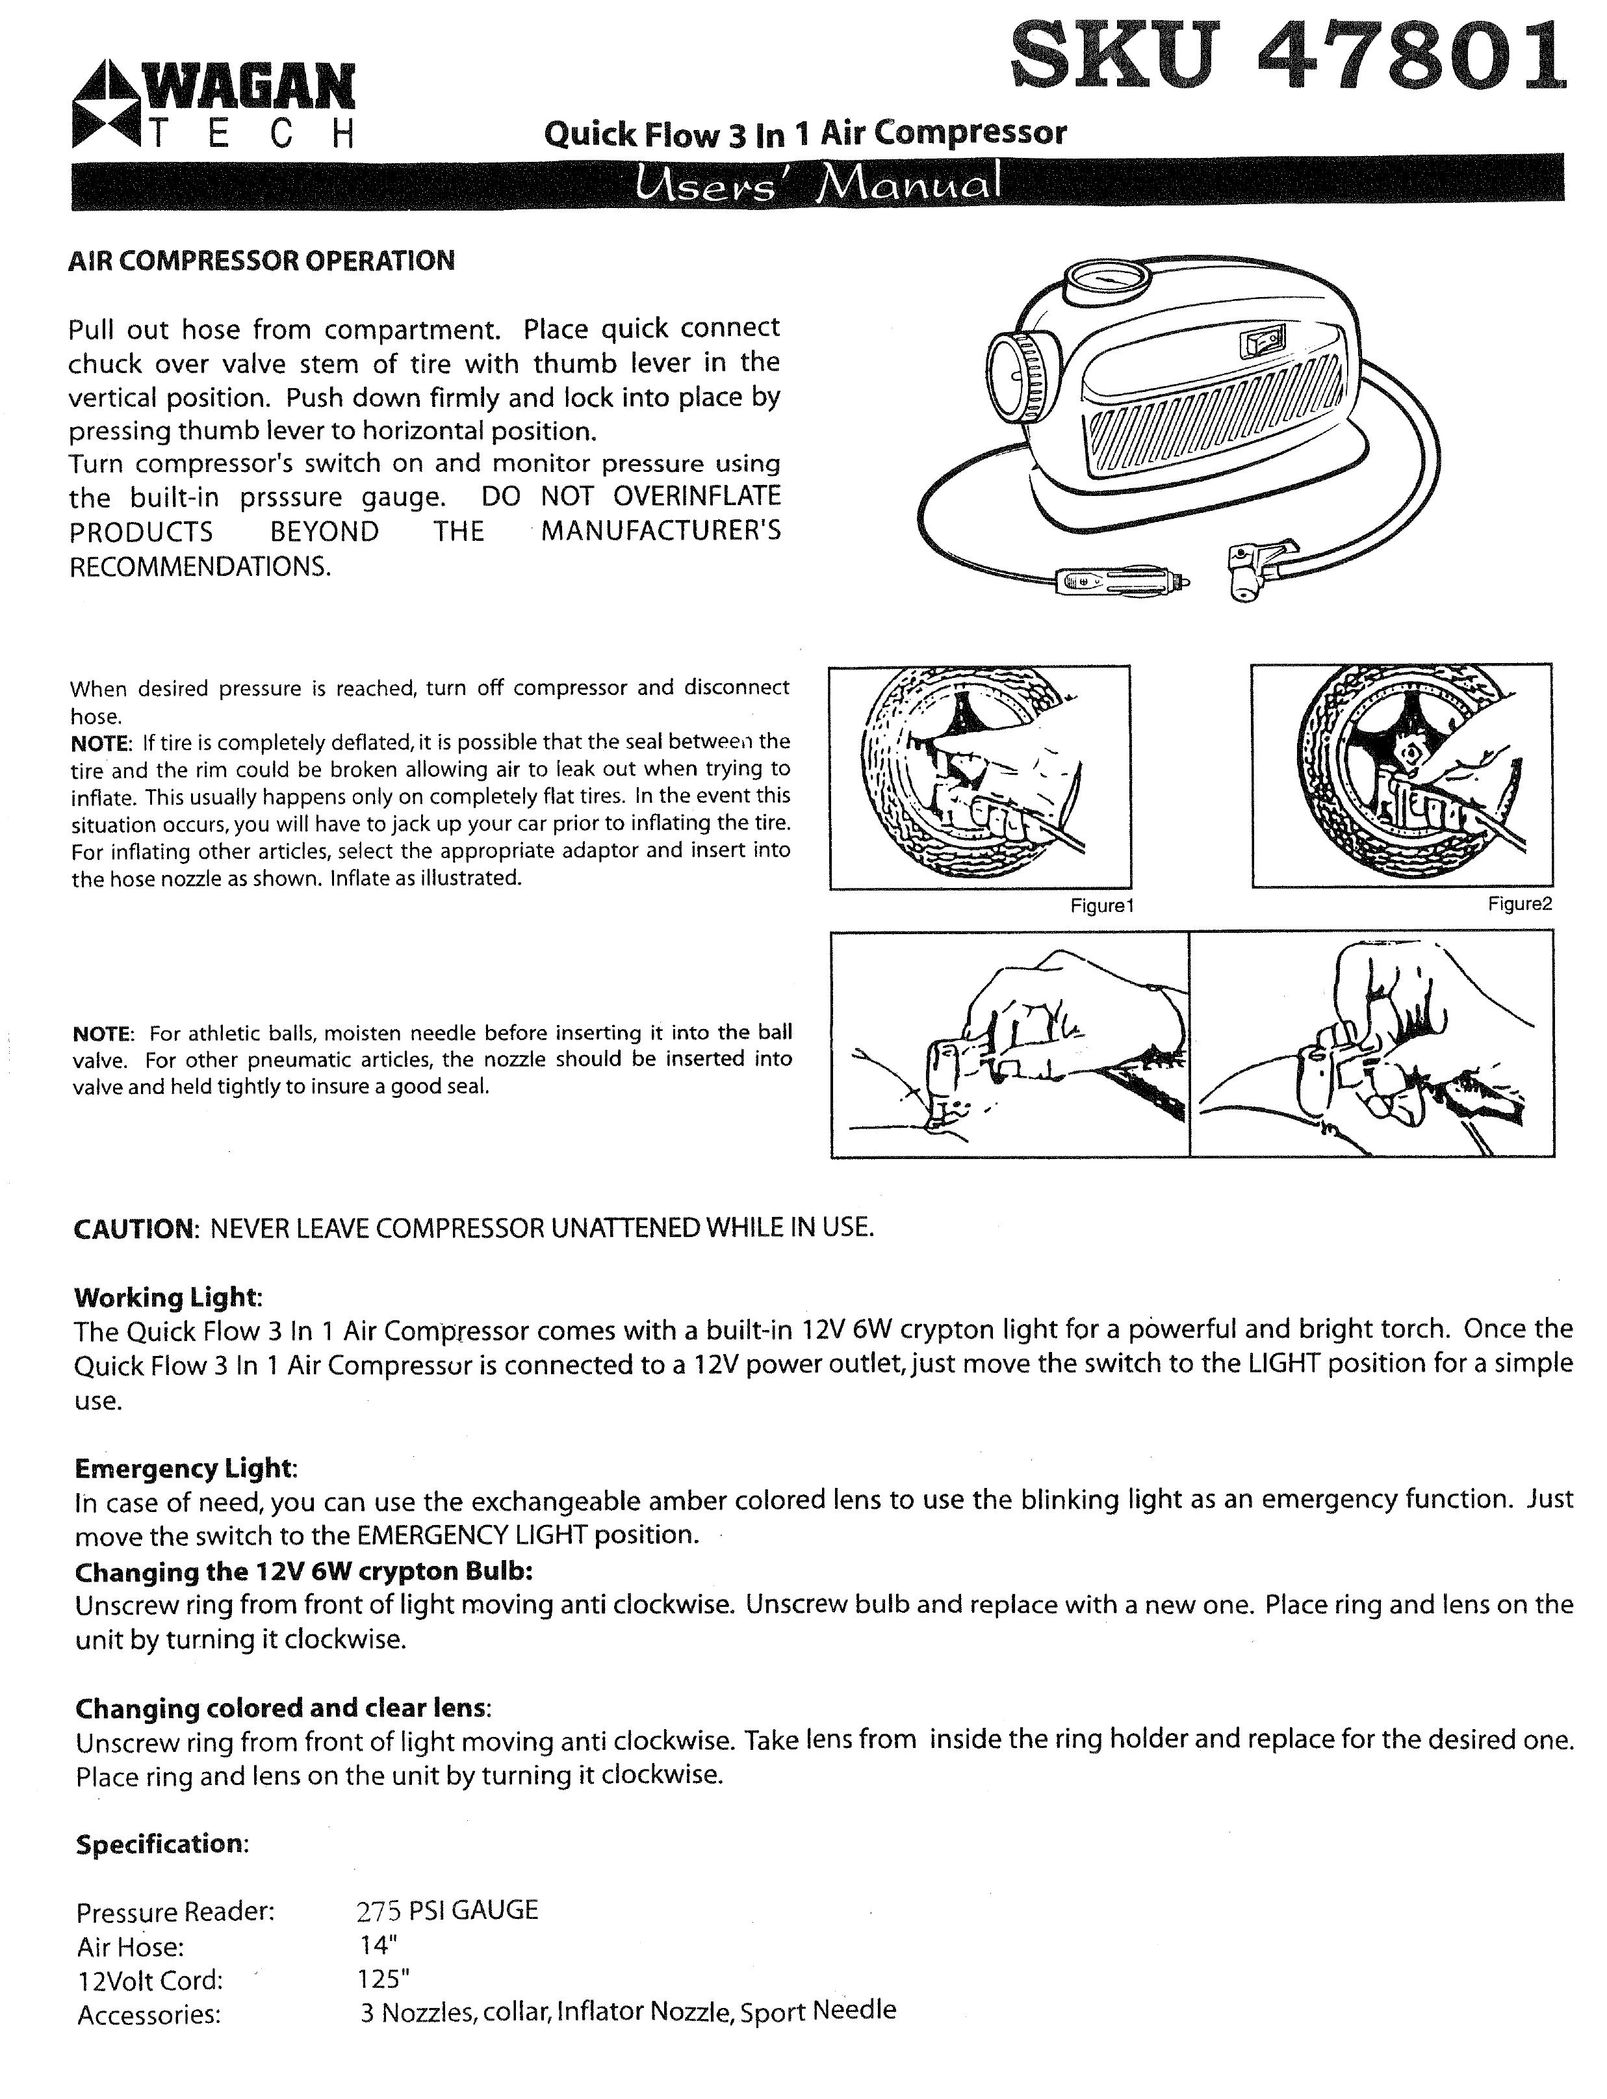 Wagan SKU 47801 Air Compressor User Manual